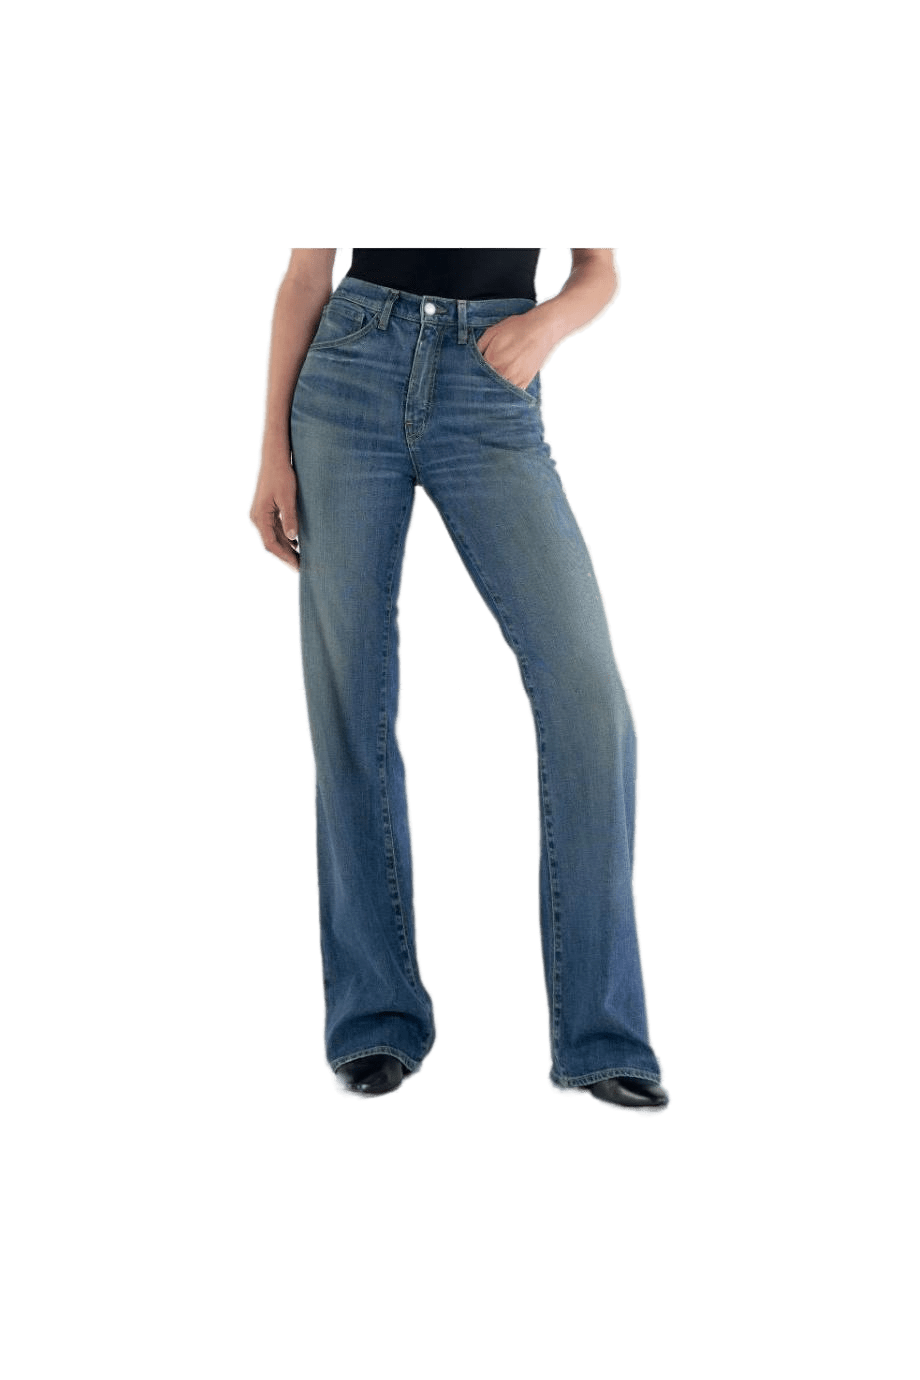 Celia cotton denim jeans 